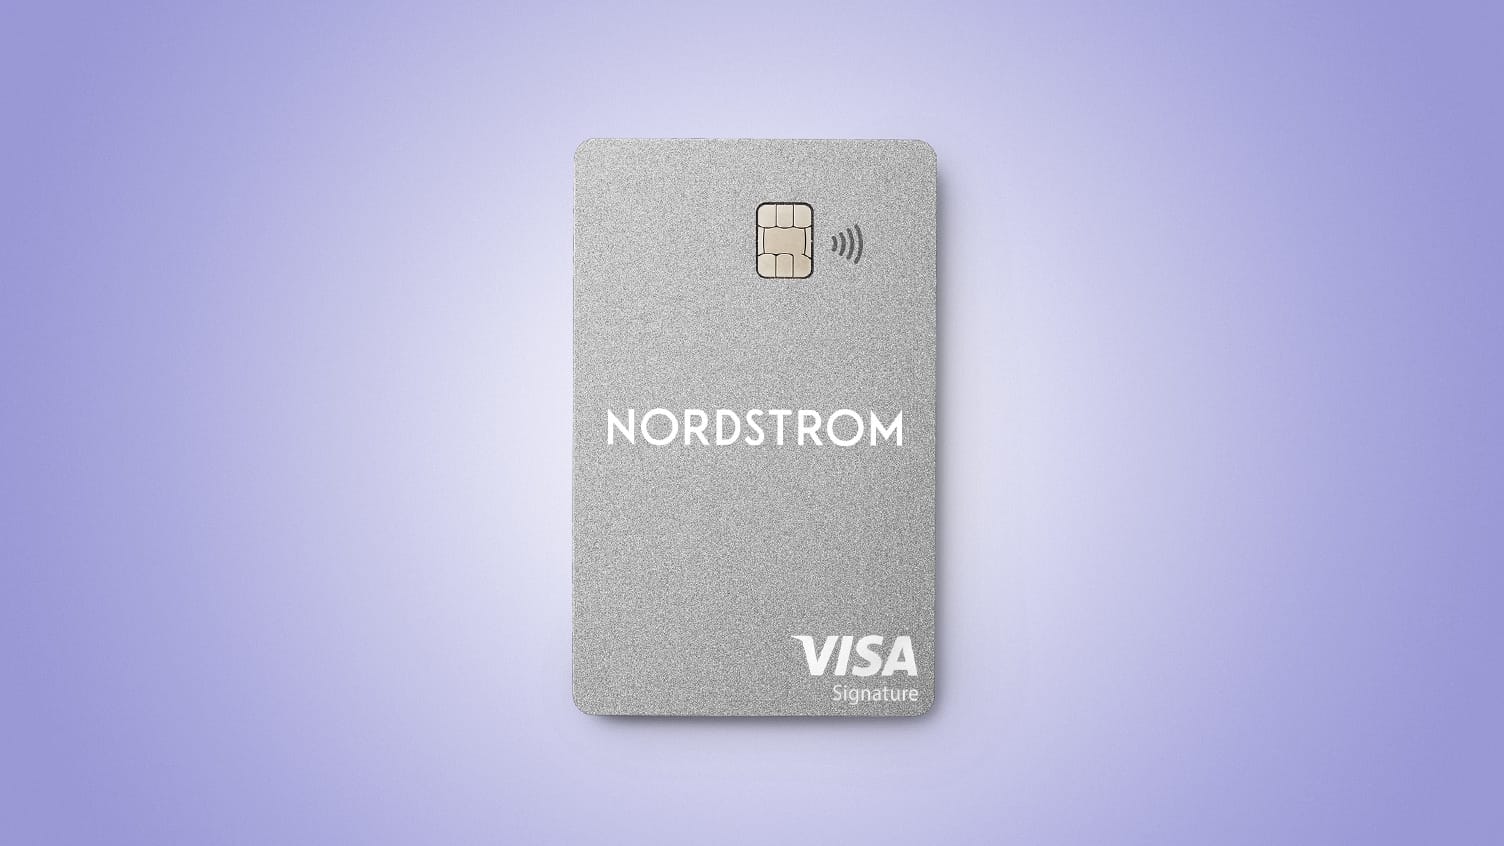 Nordstrom Visa Credit Card Review - Buy Side from WSJ